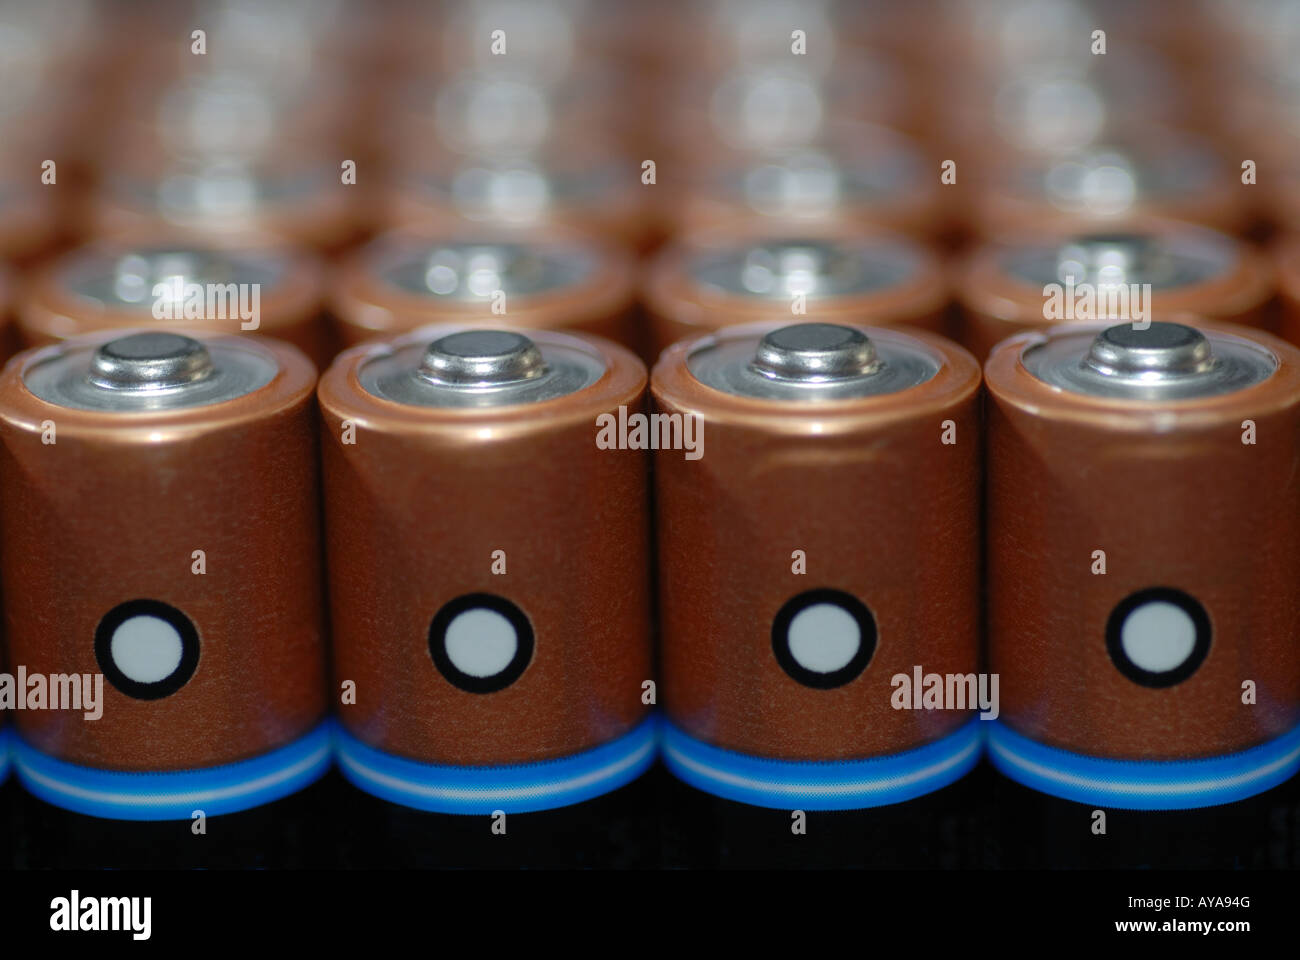 Alkaline batteries Stock Photo